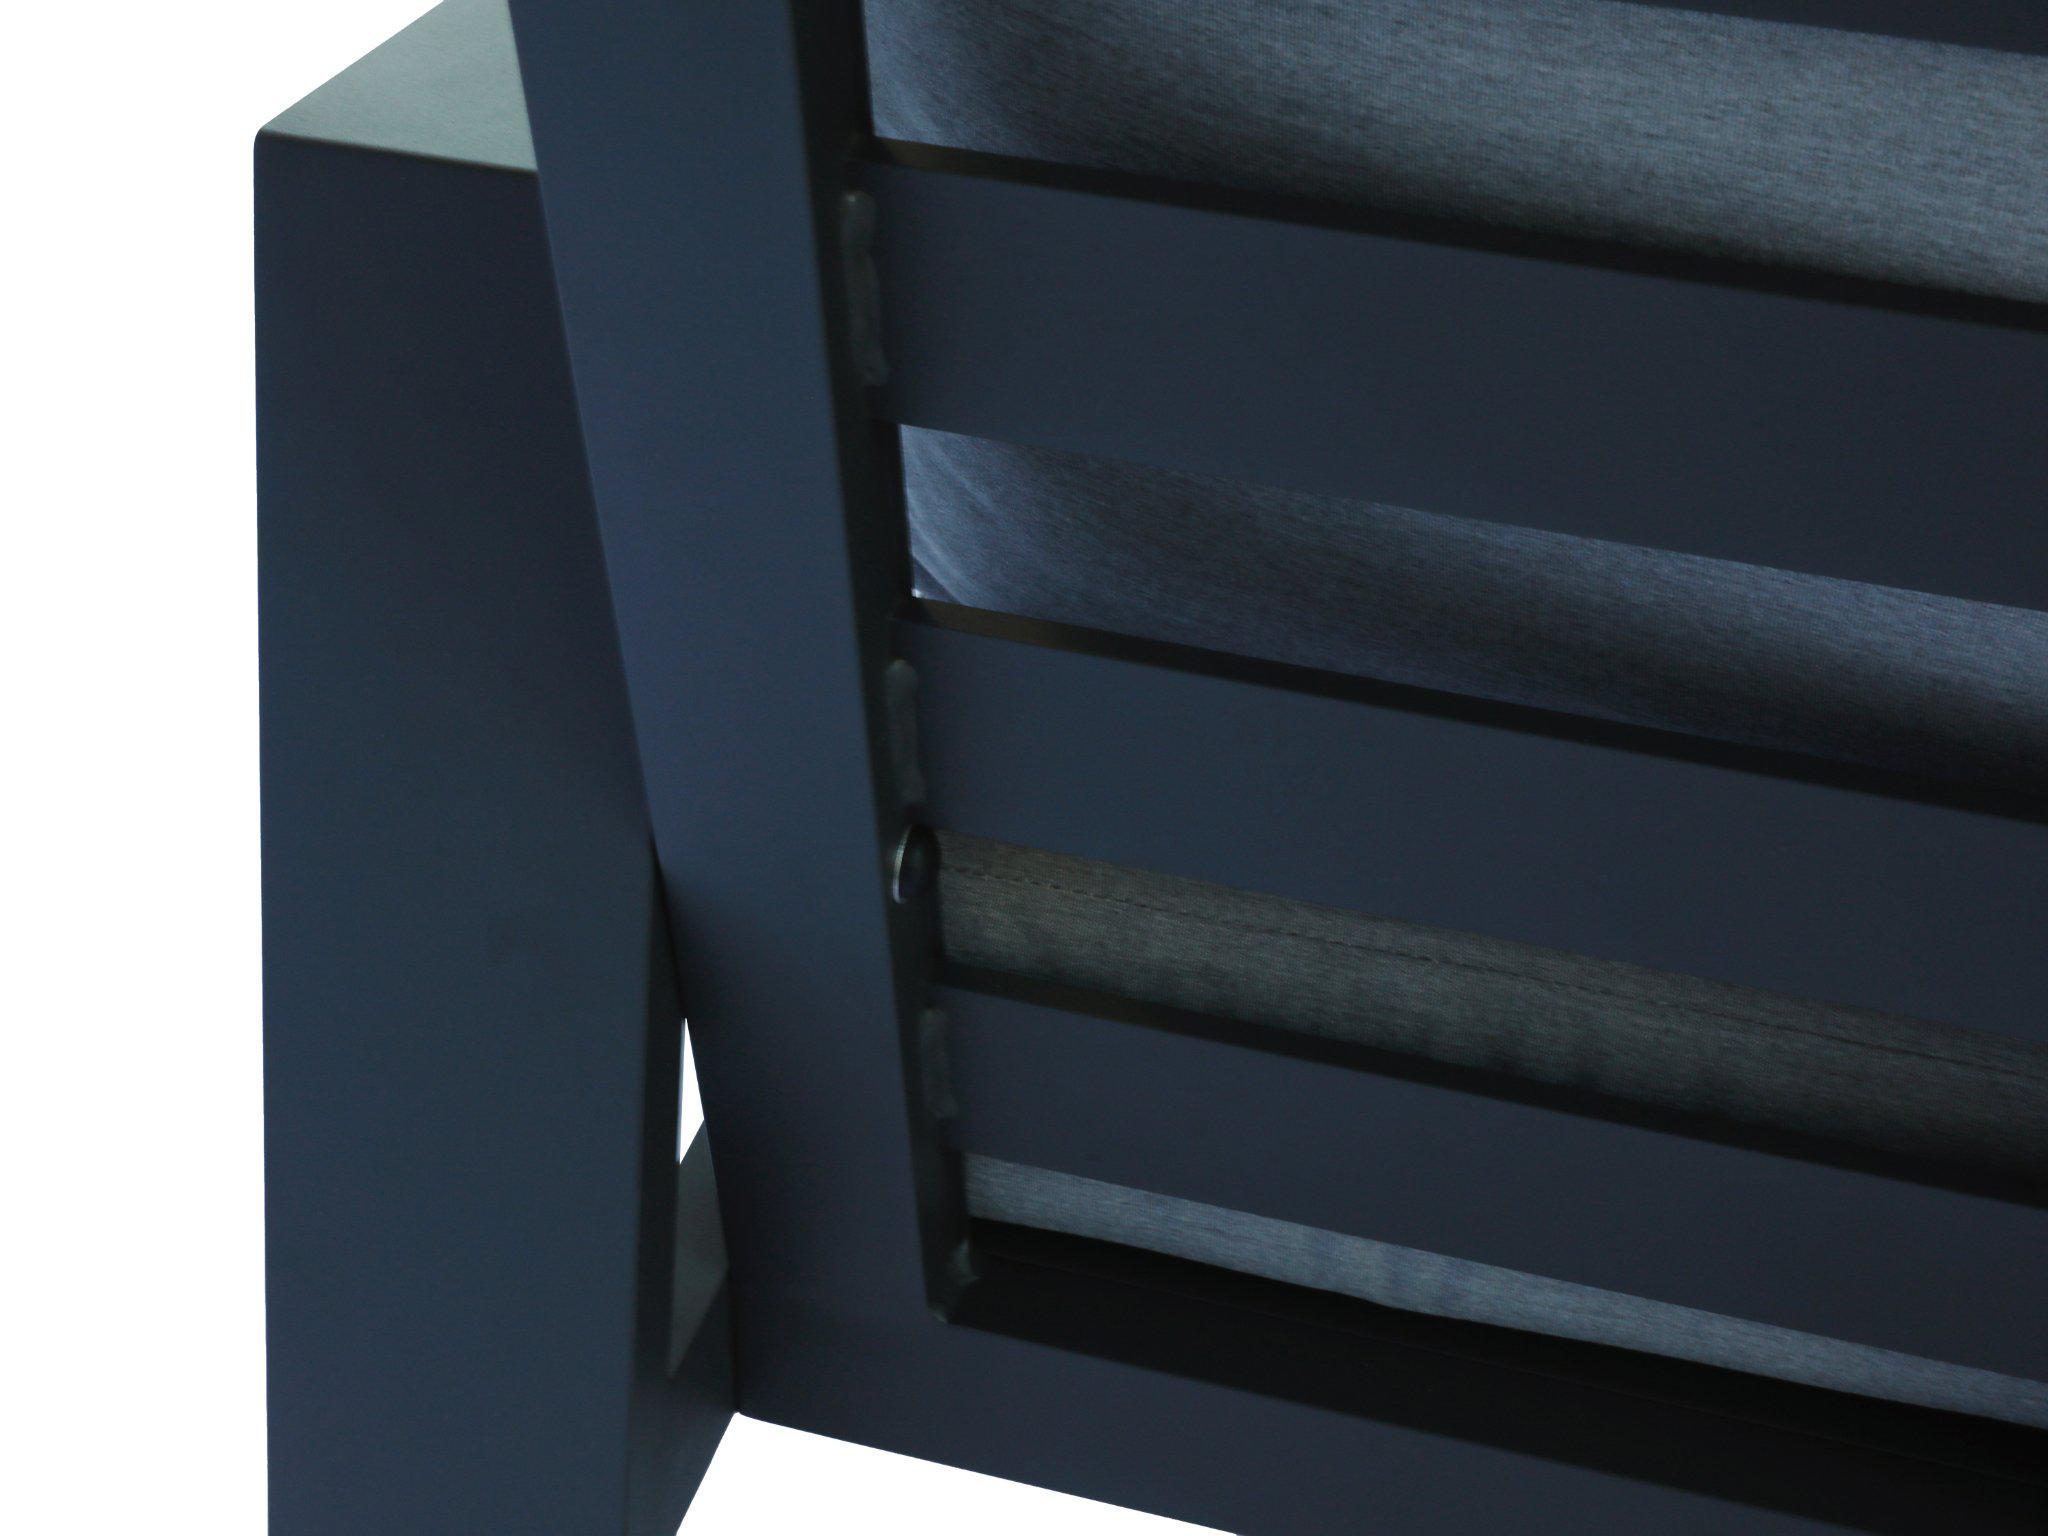 FurnitureOkay Bondi 4-Piece Aluminium Outdoor Lounge Setting — Charcoal